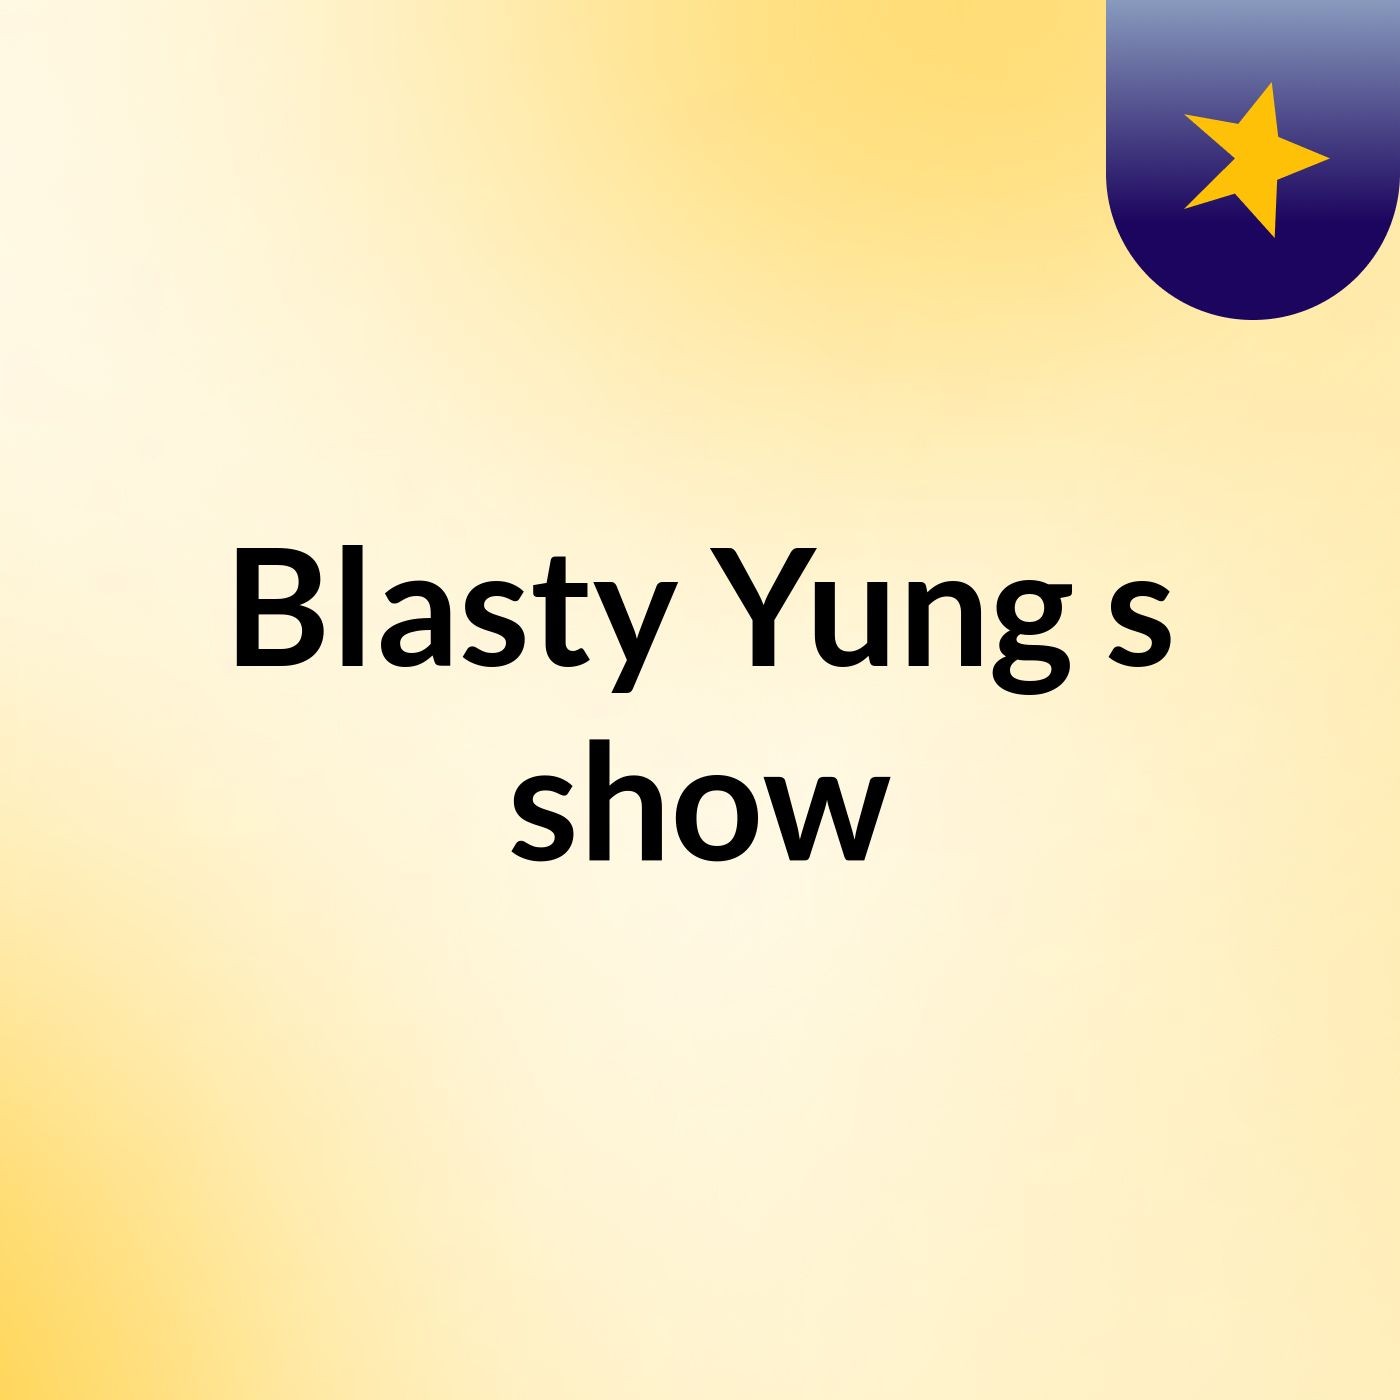 Blasty Yung's show